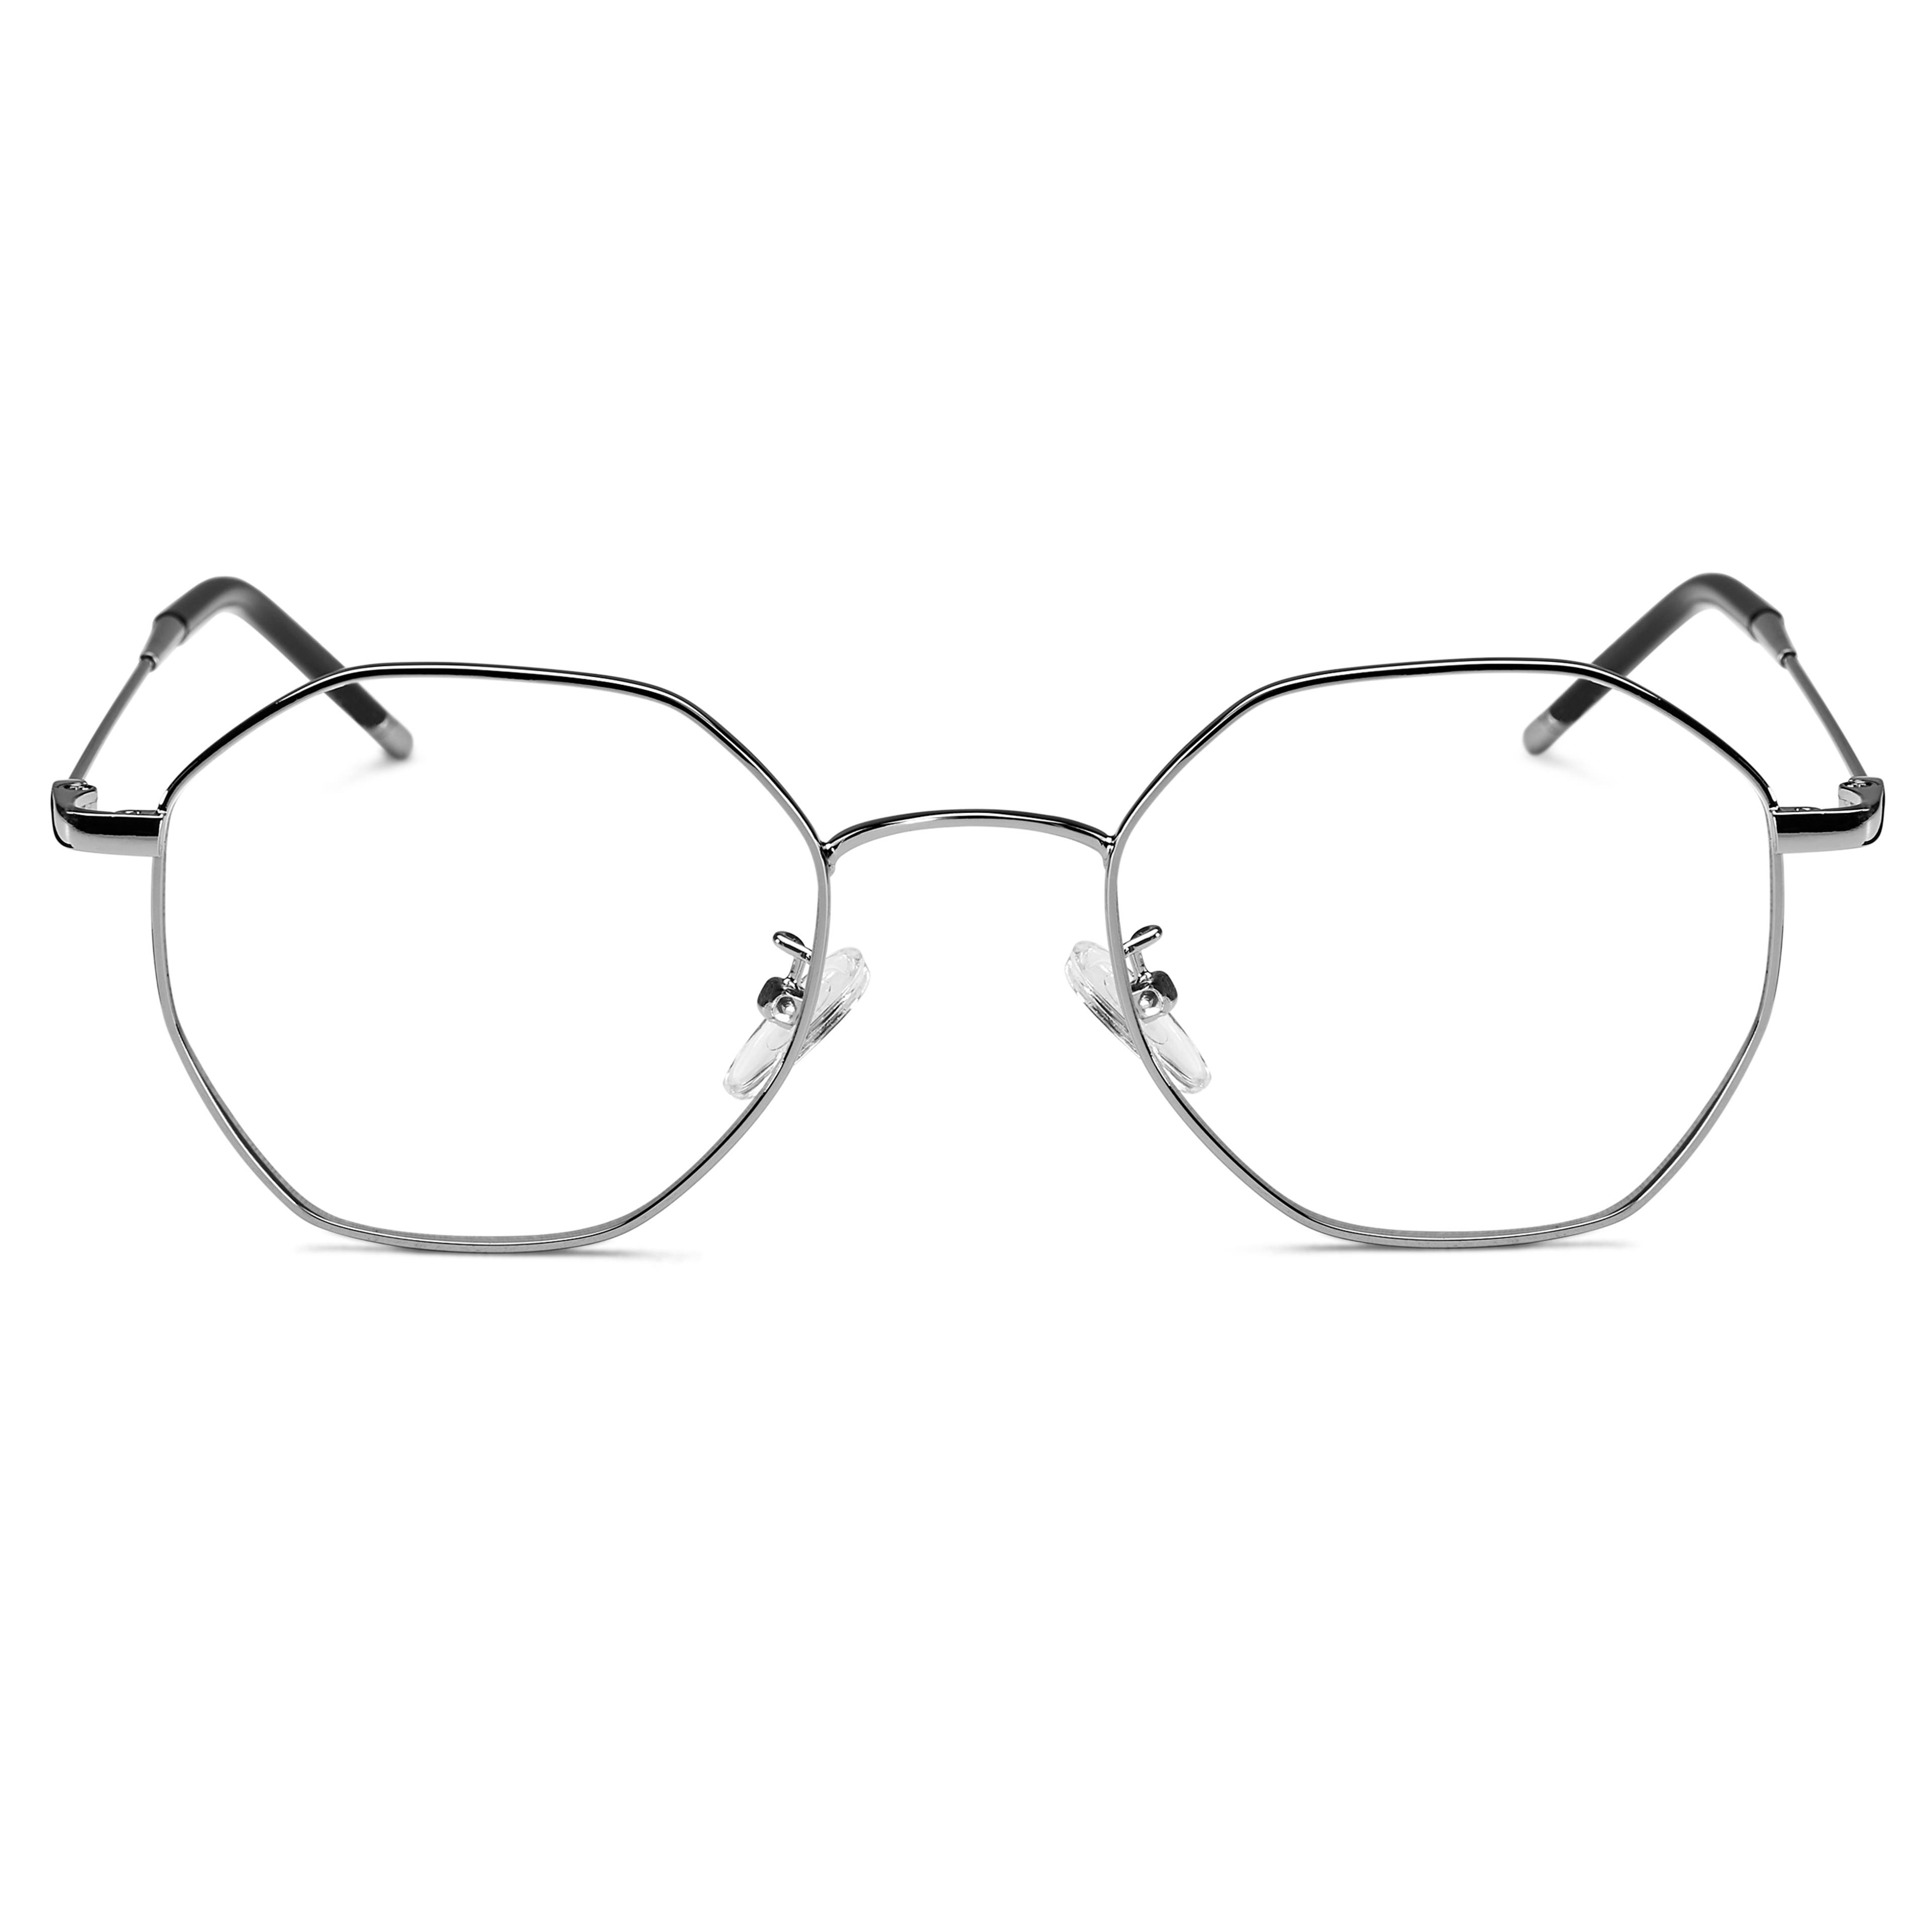 Executive Silver-Tone Glasses